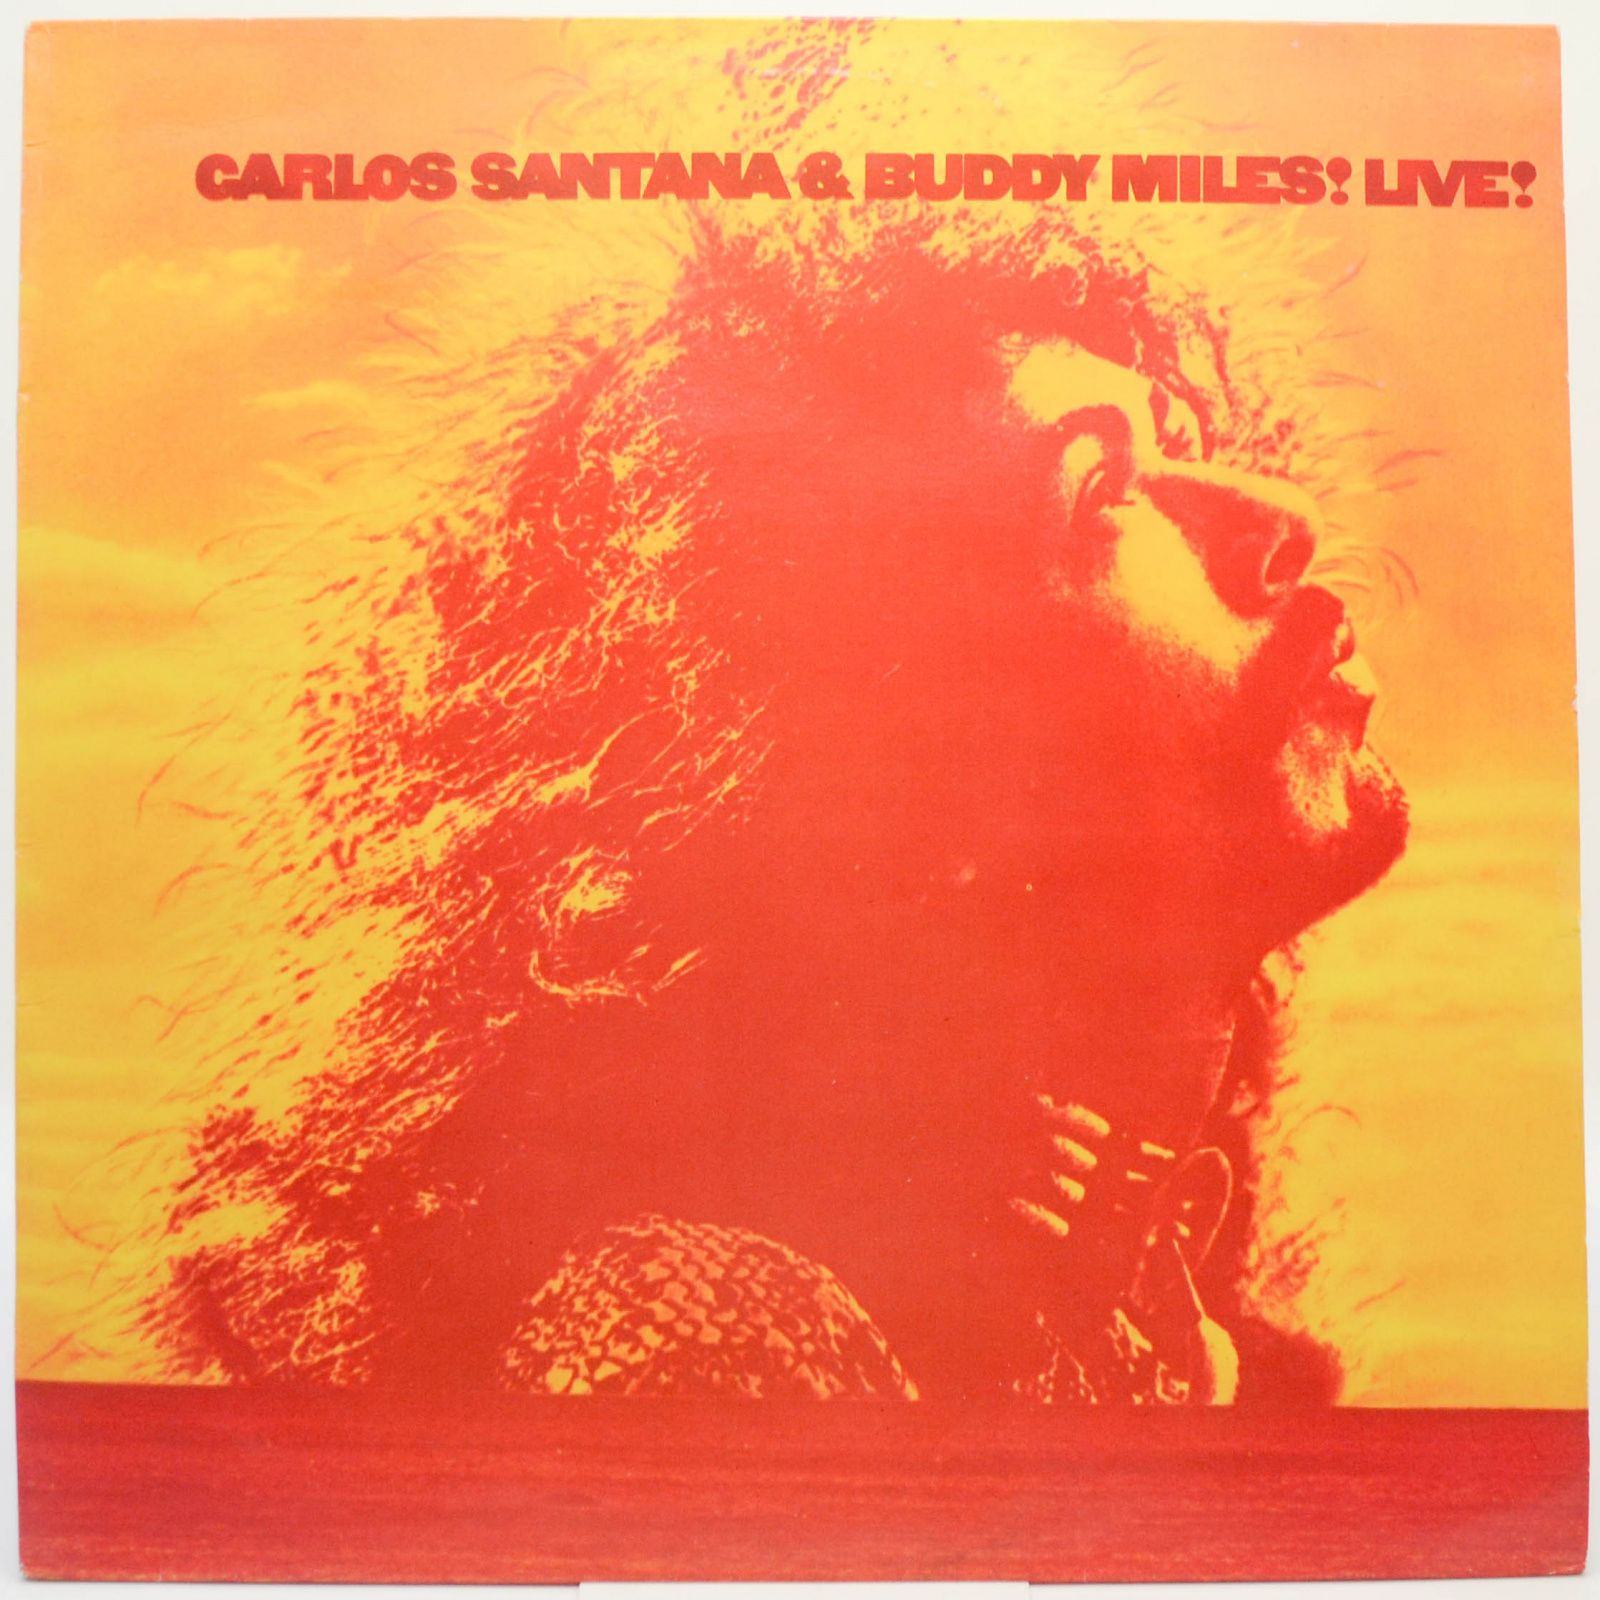 Carlos Santana & Buddy Miles! Live!, 1972